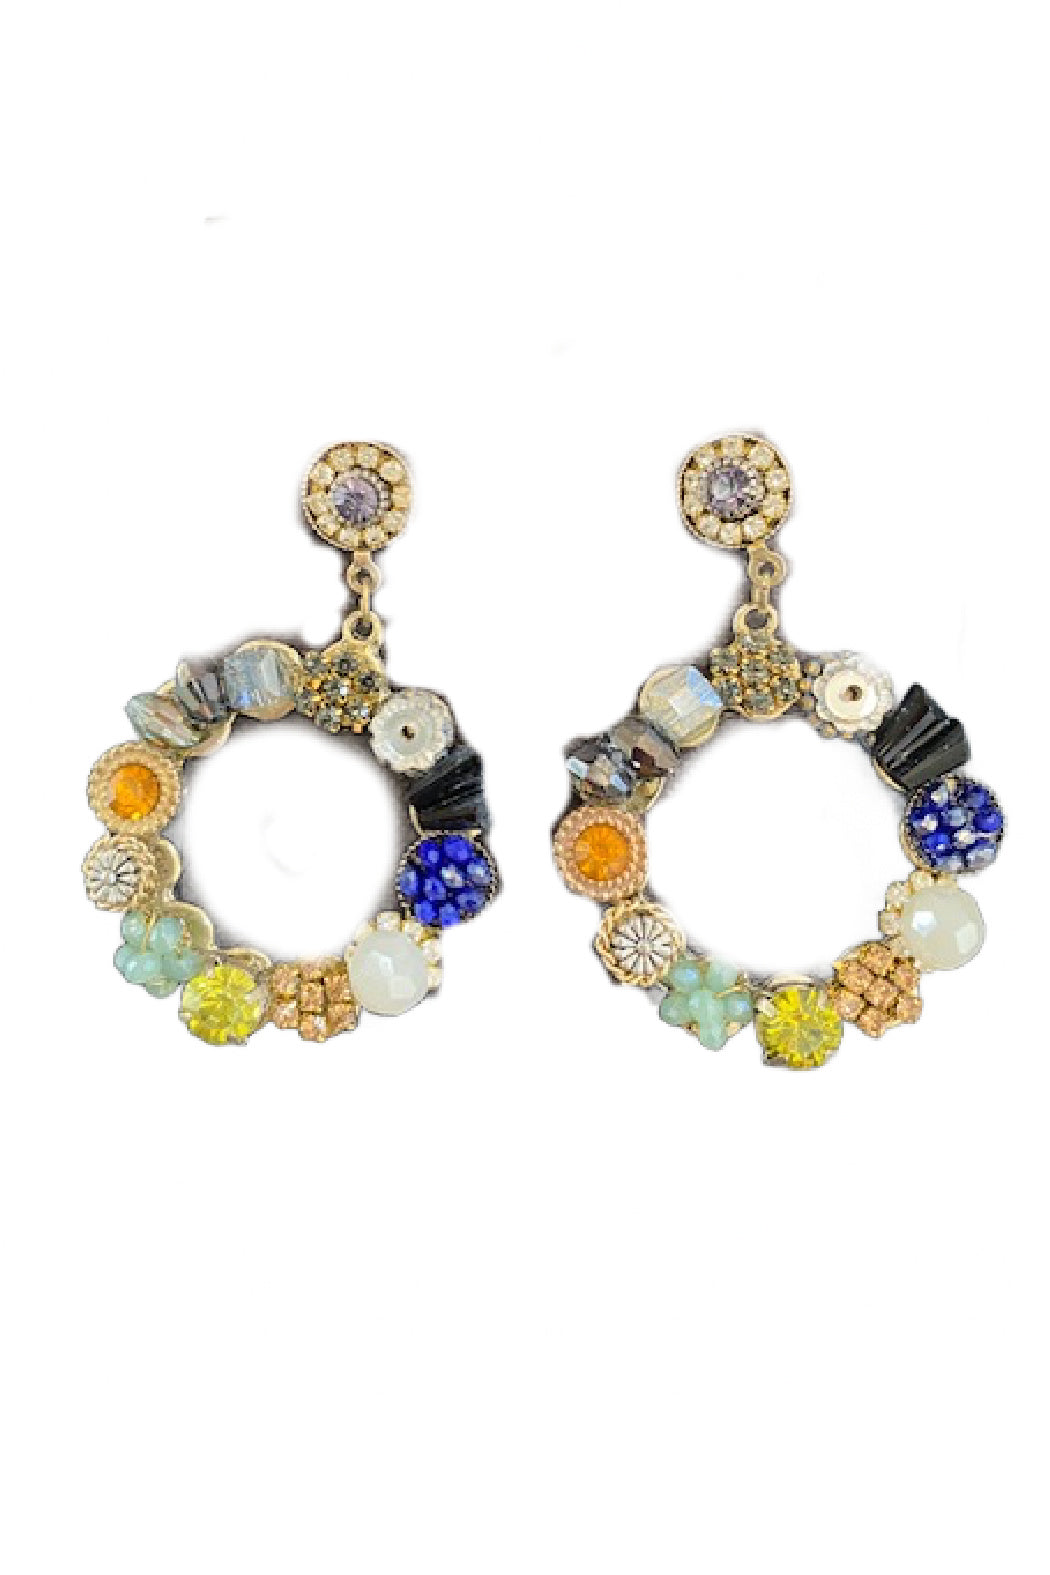 Ring of Jewels Earrings